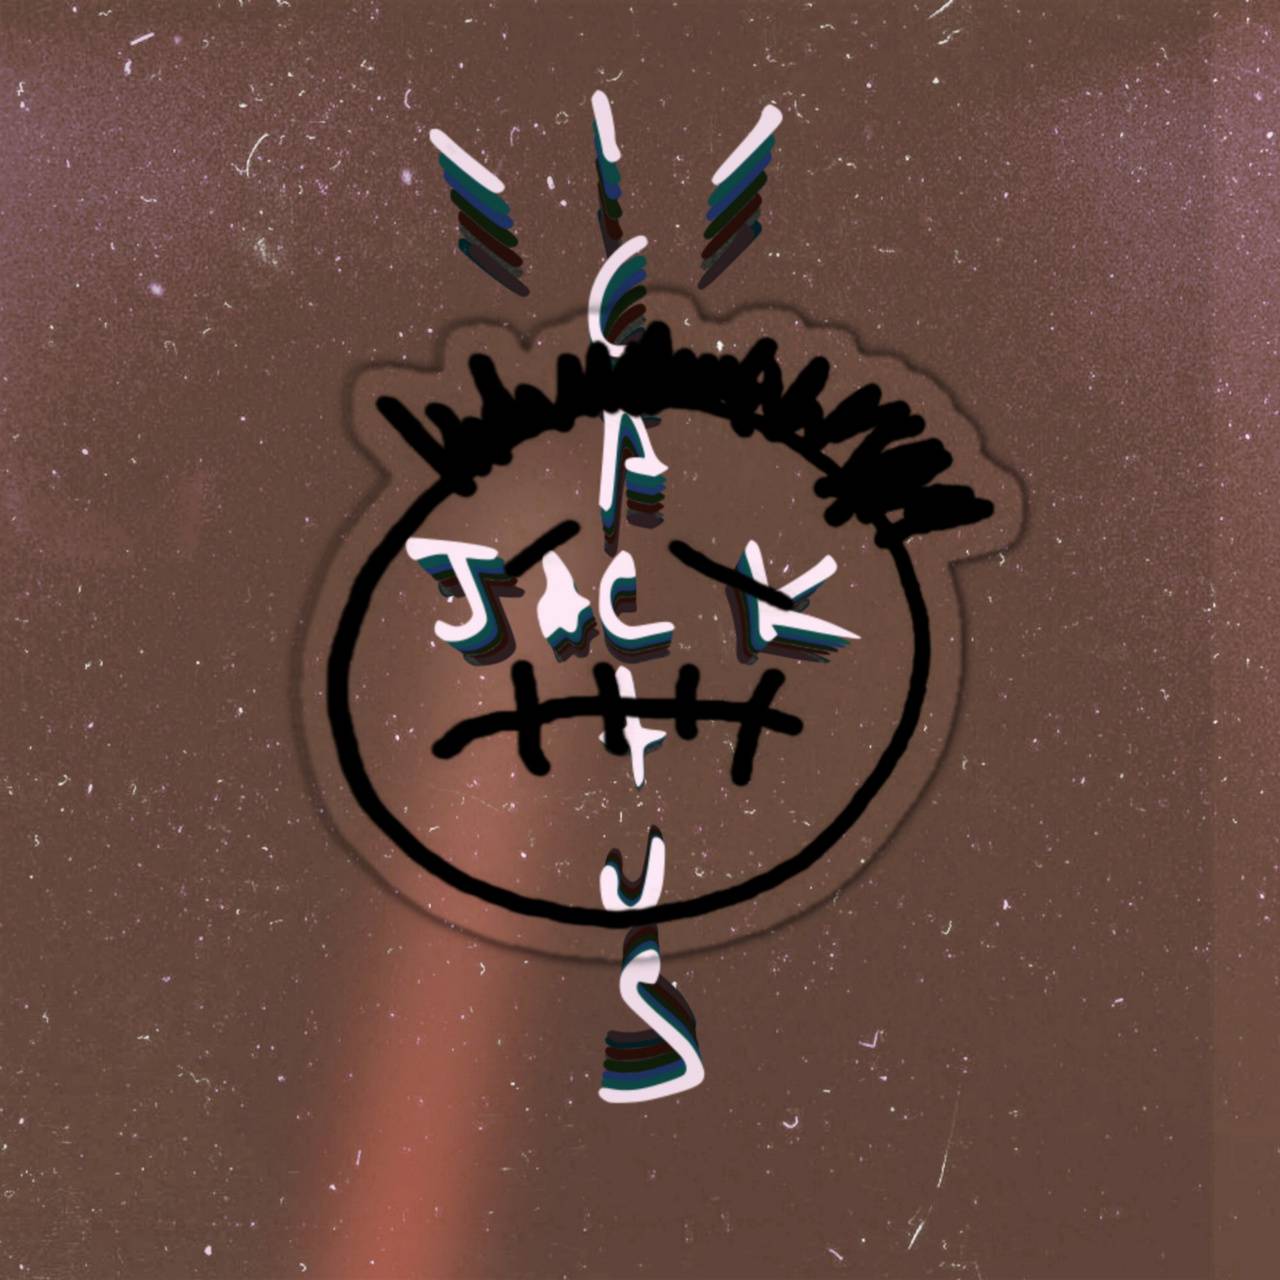 Travis Scott x Jackboys x Cactus Jack  A3 Poster  Frankly Wearing